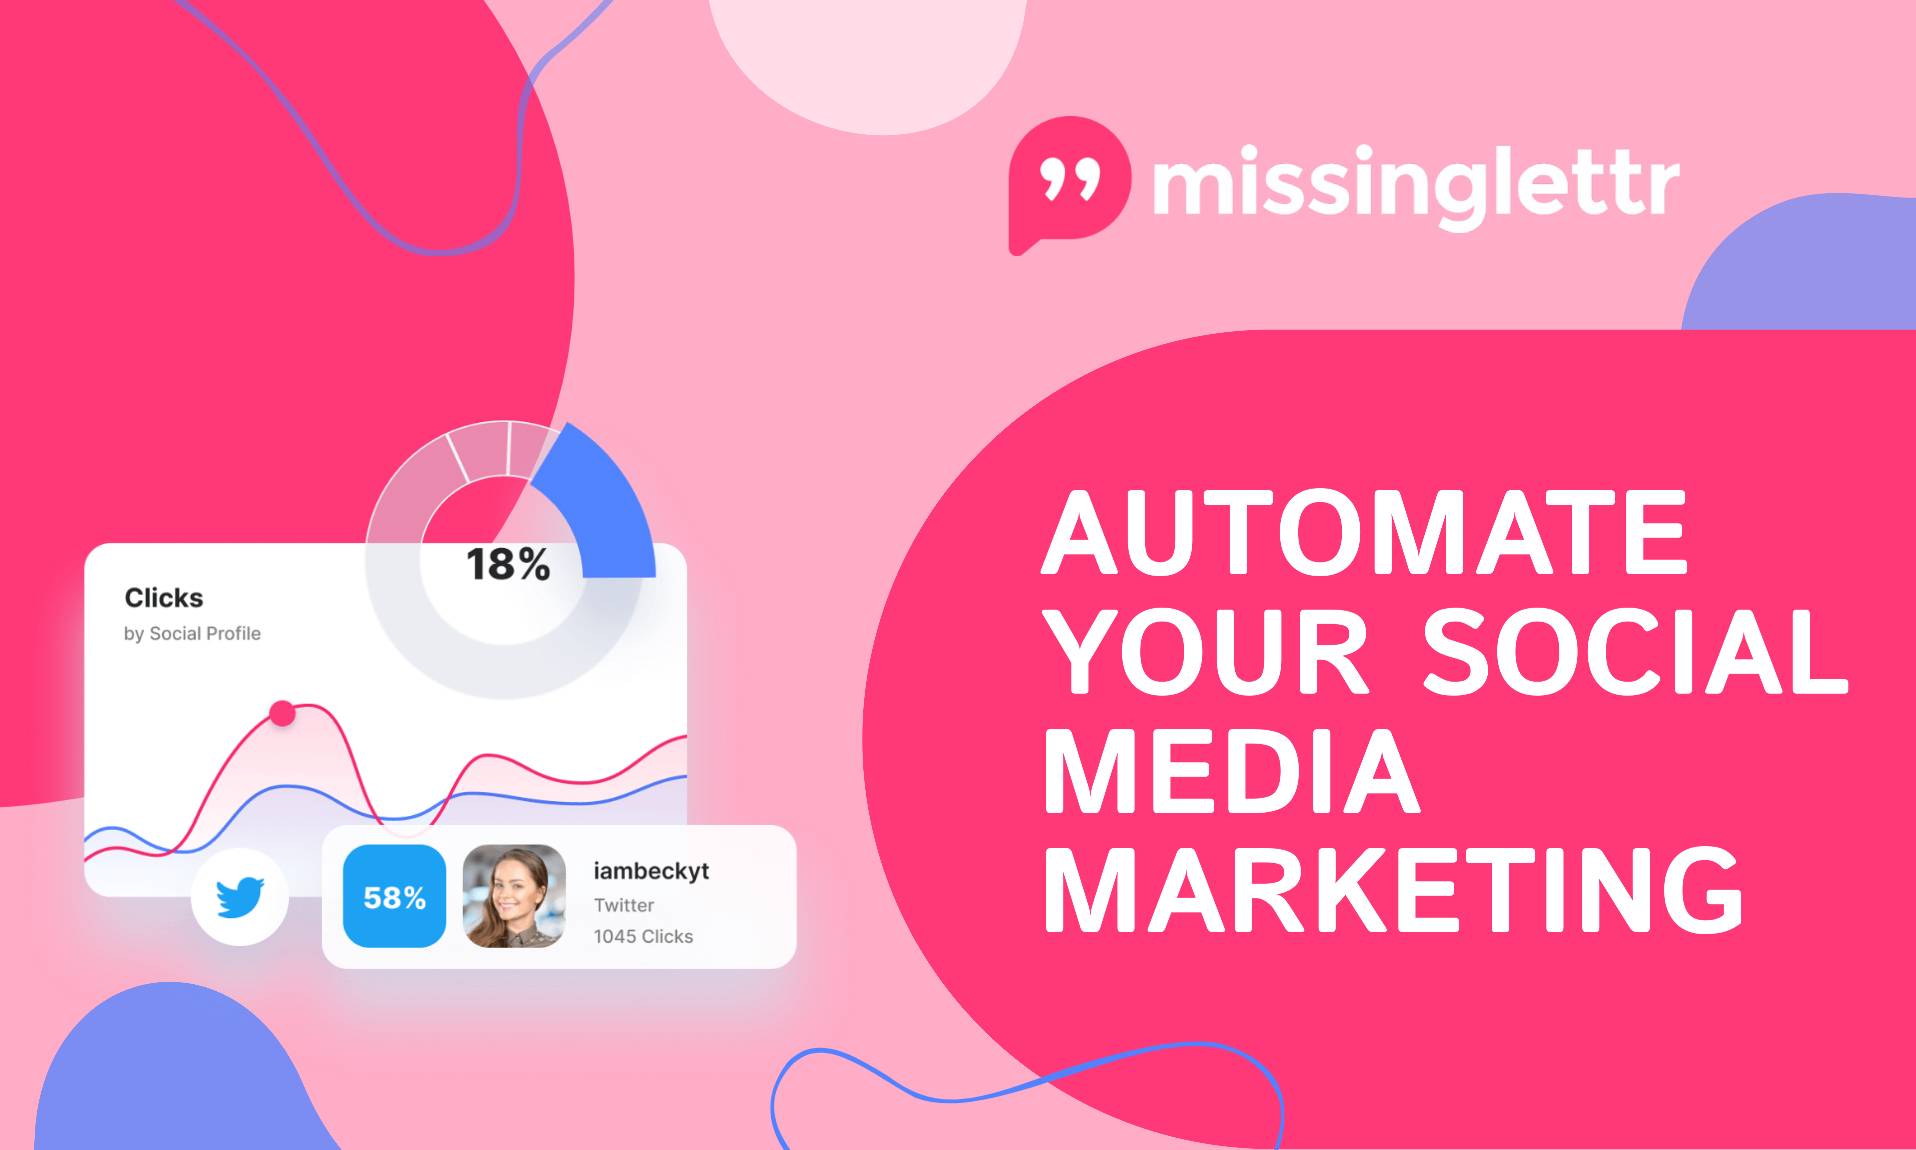 Missinglettr - Automate your Social Media Marketing - Custom dimensions